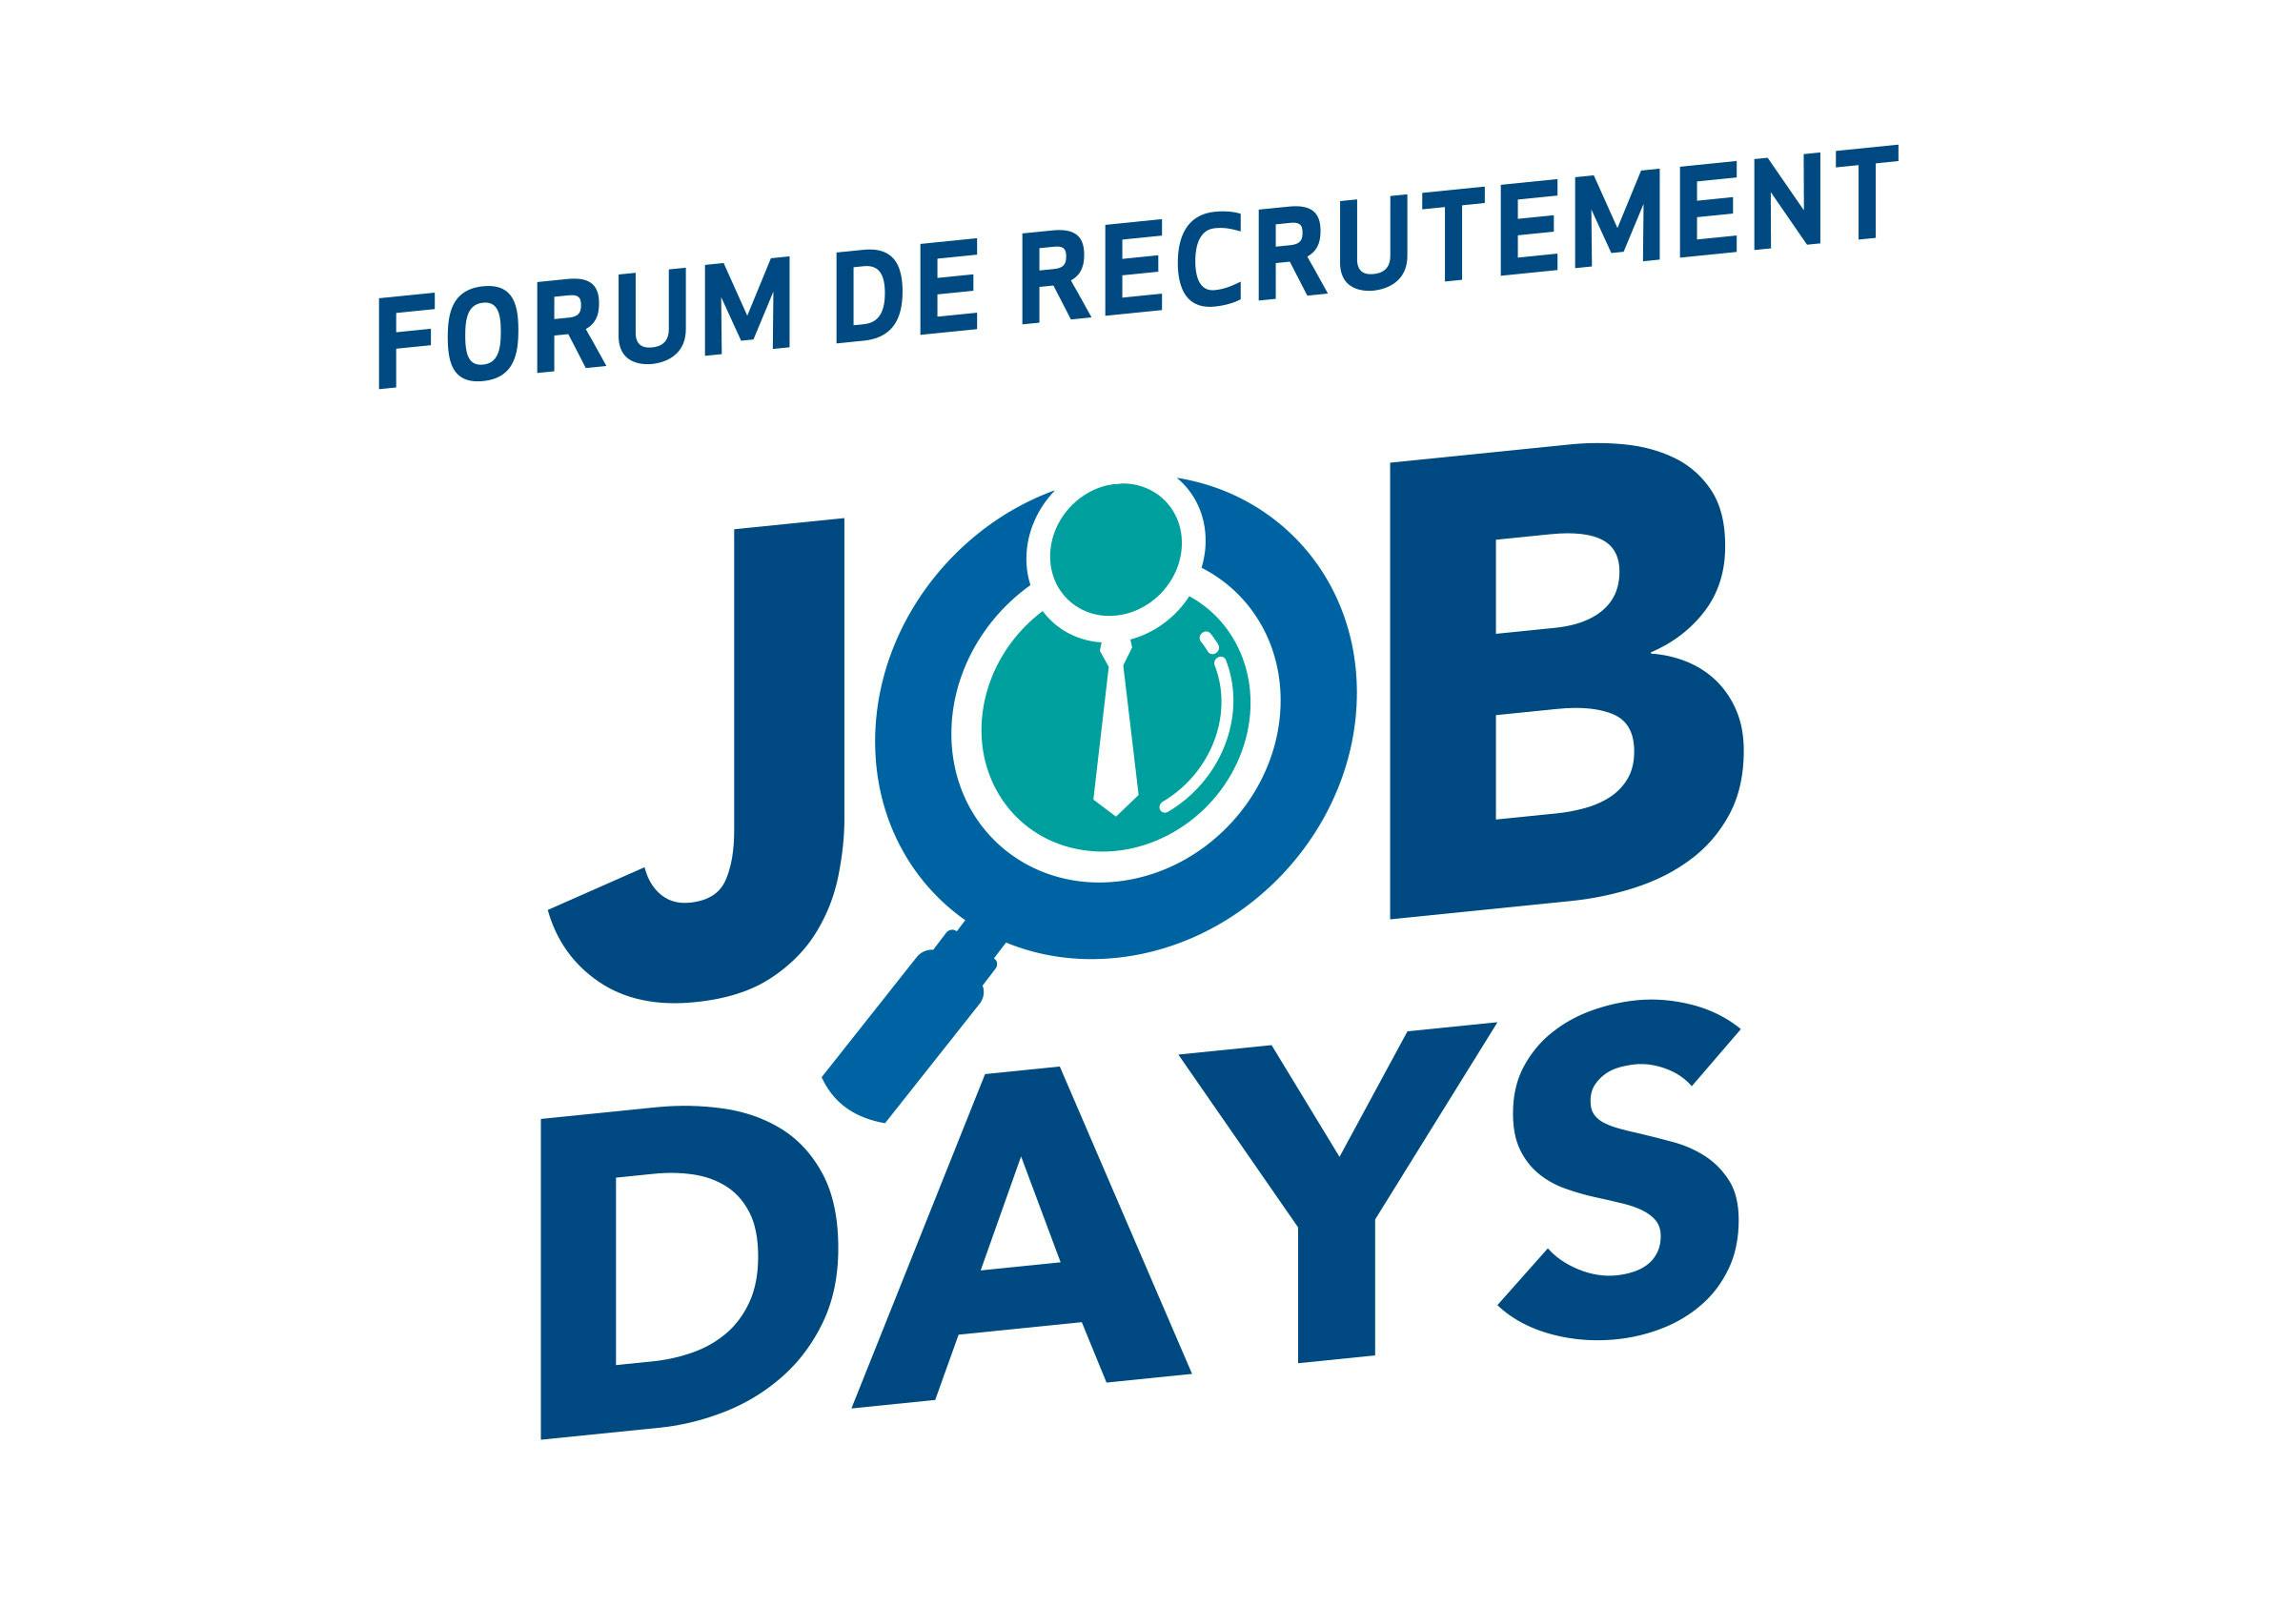 JOB DAYS – FORUM DE RECRUTEMENT 2019